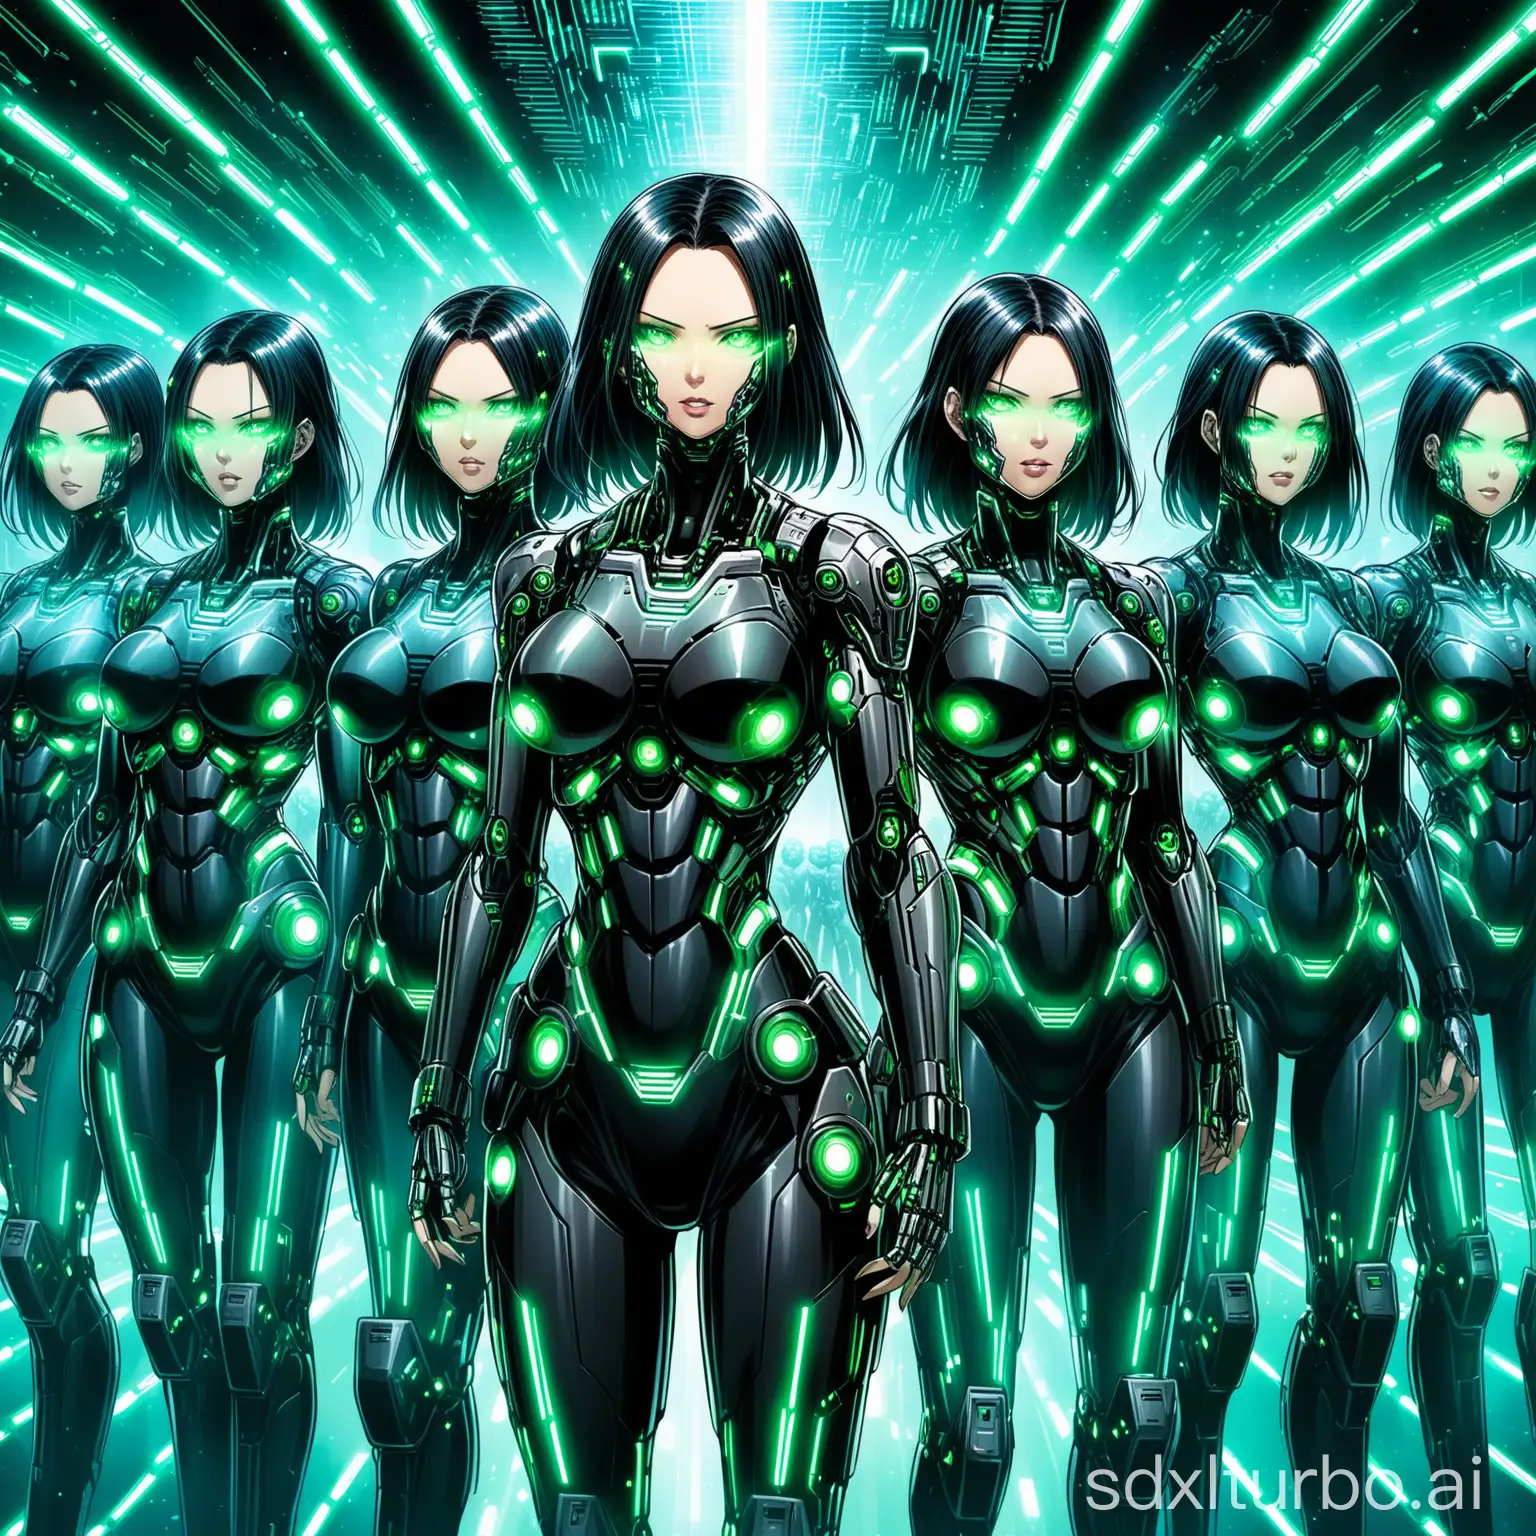 Anime-Borg-Girls-vs-Futuristic-Human-Soldiers-in-Cybernetic-Combat